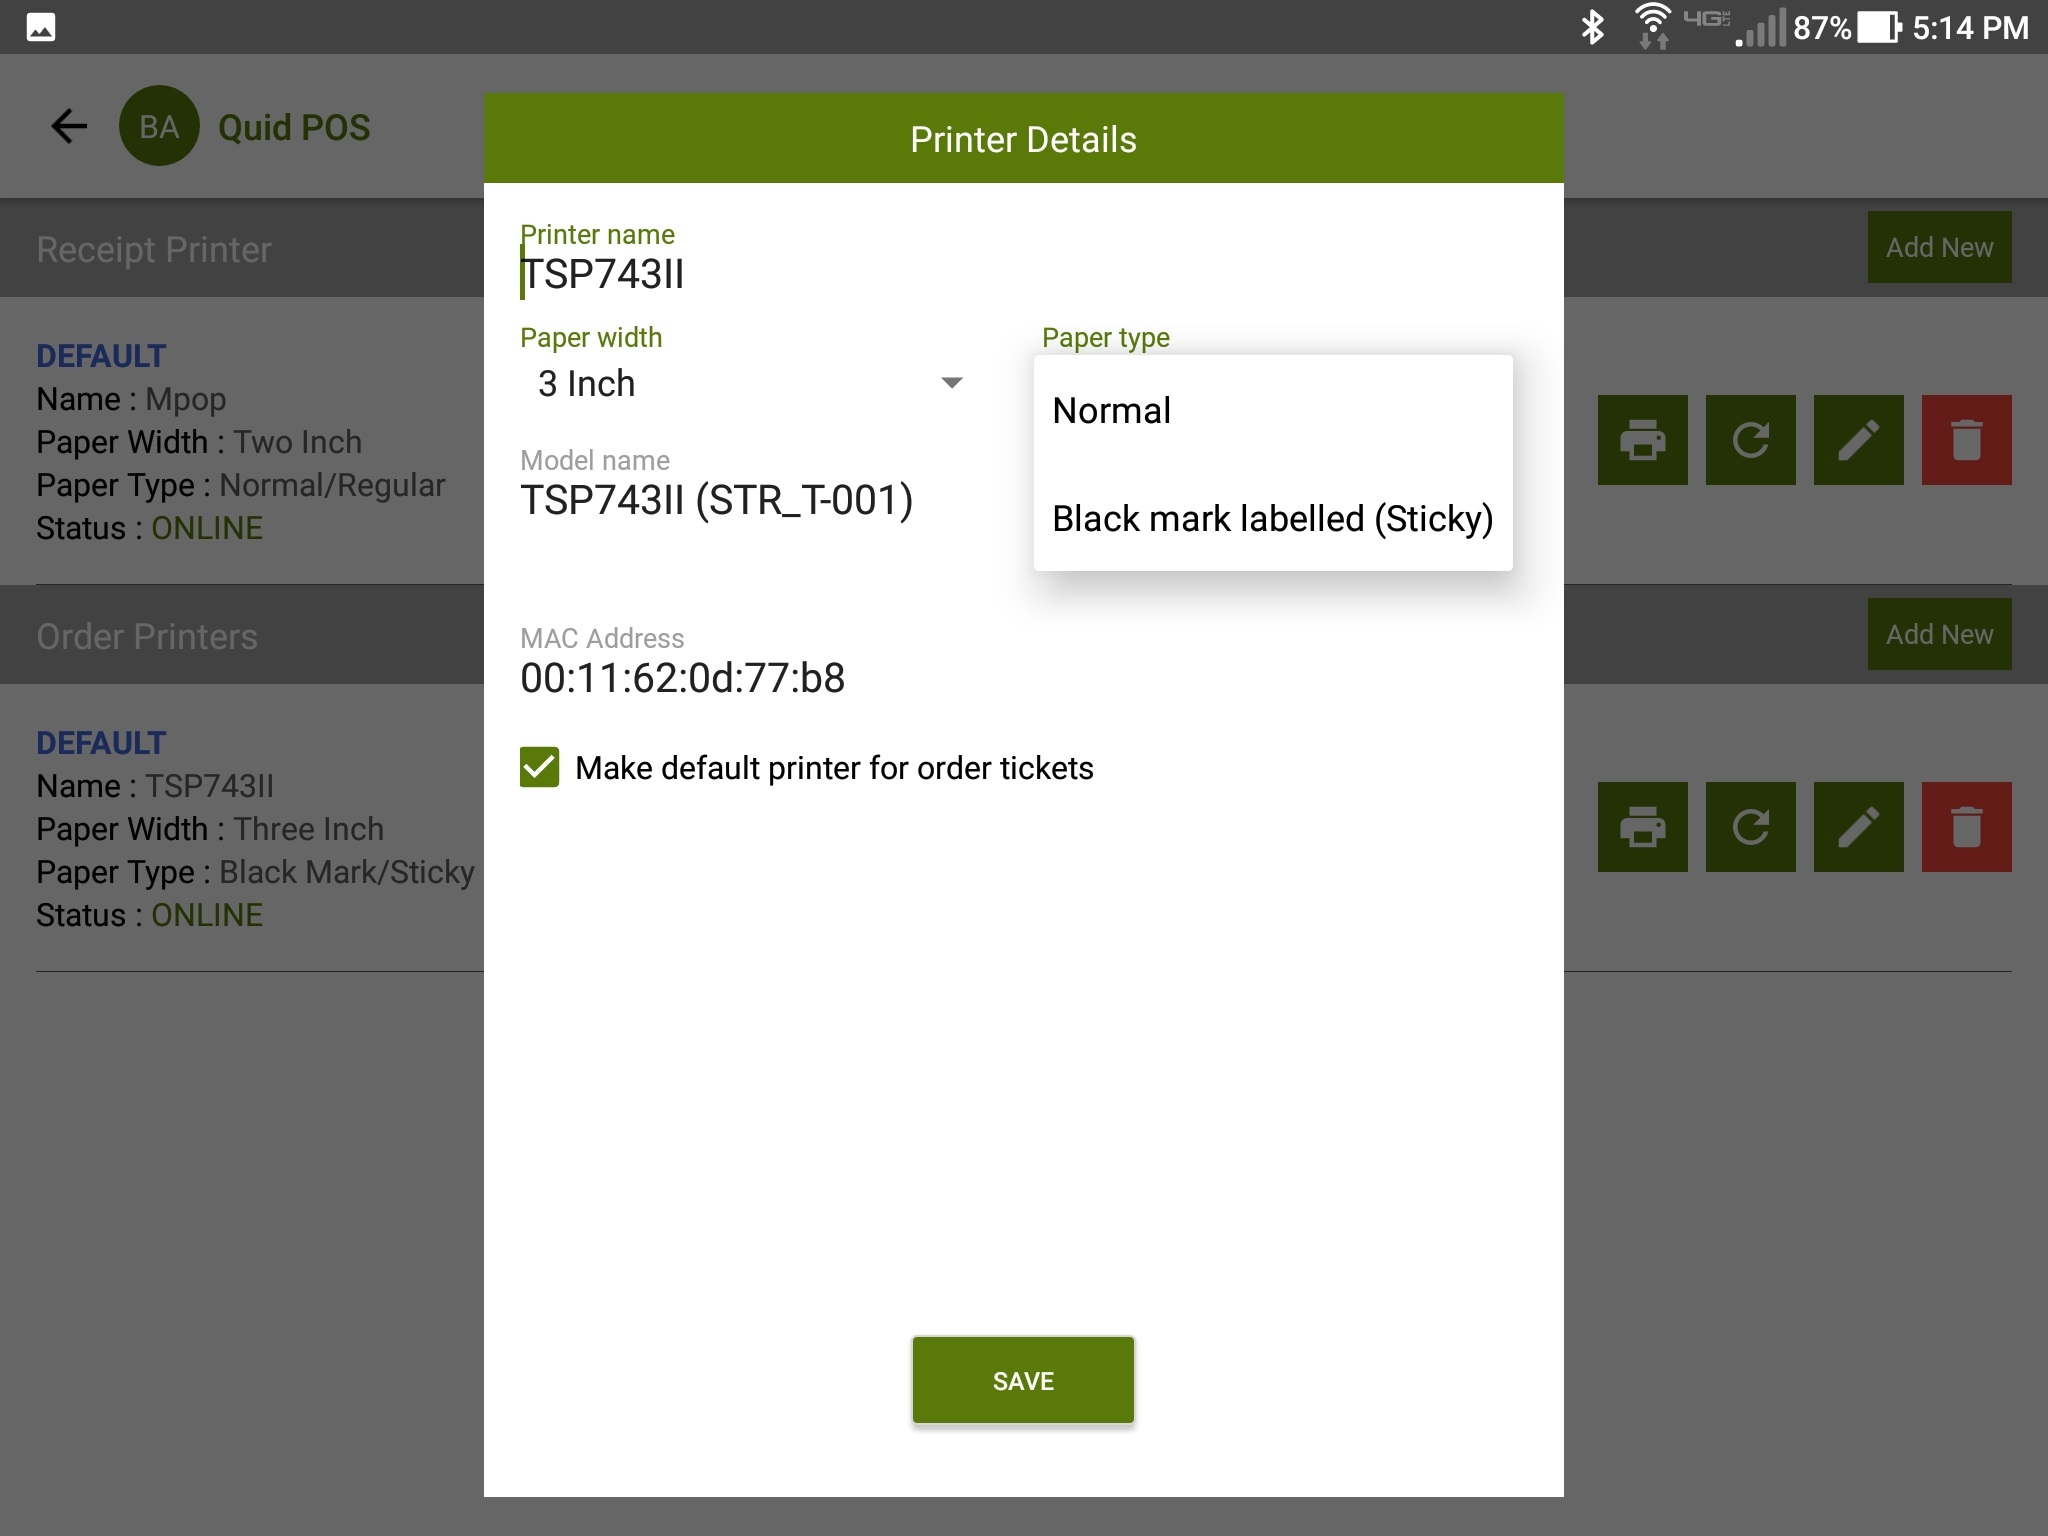 Quid POS mobile app: Order Printer Setup